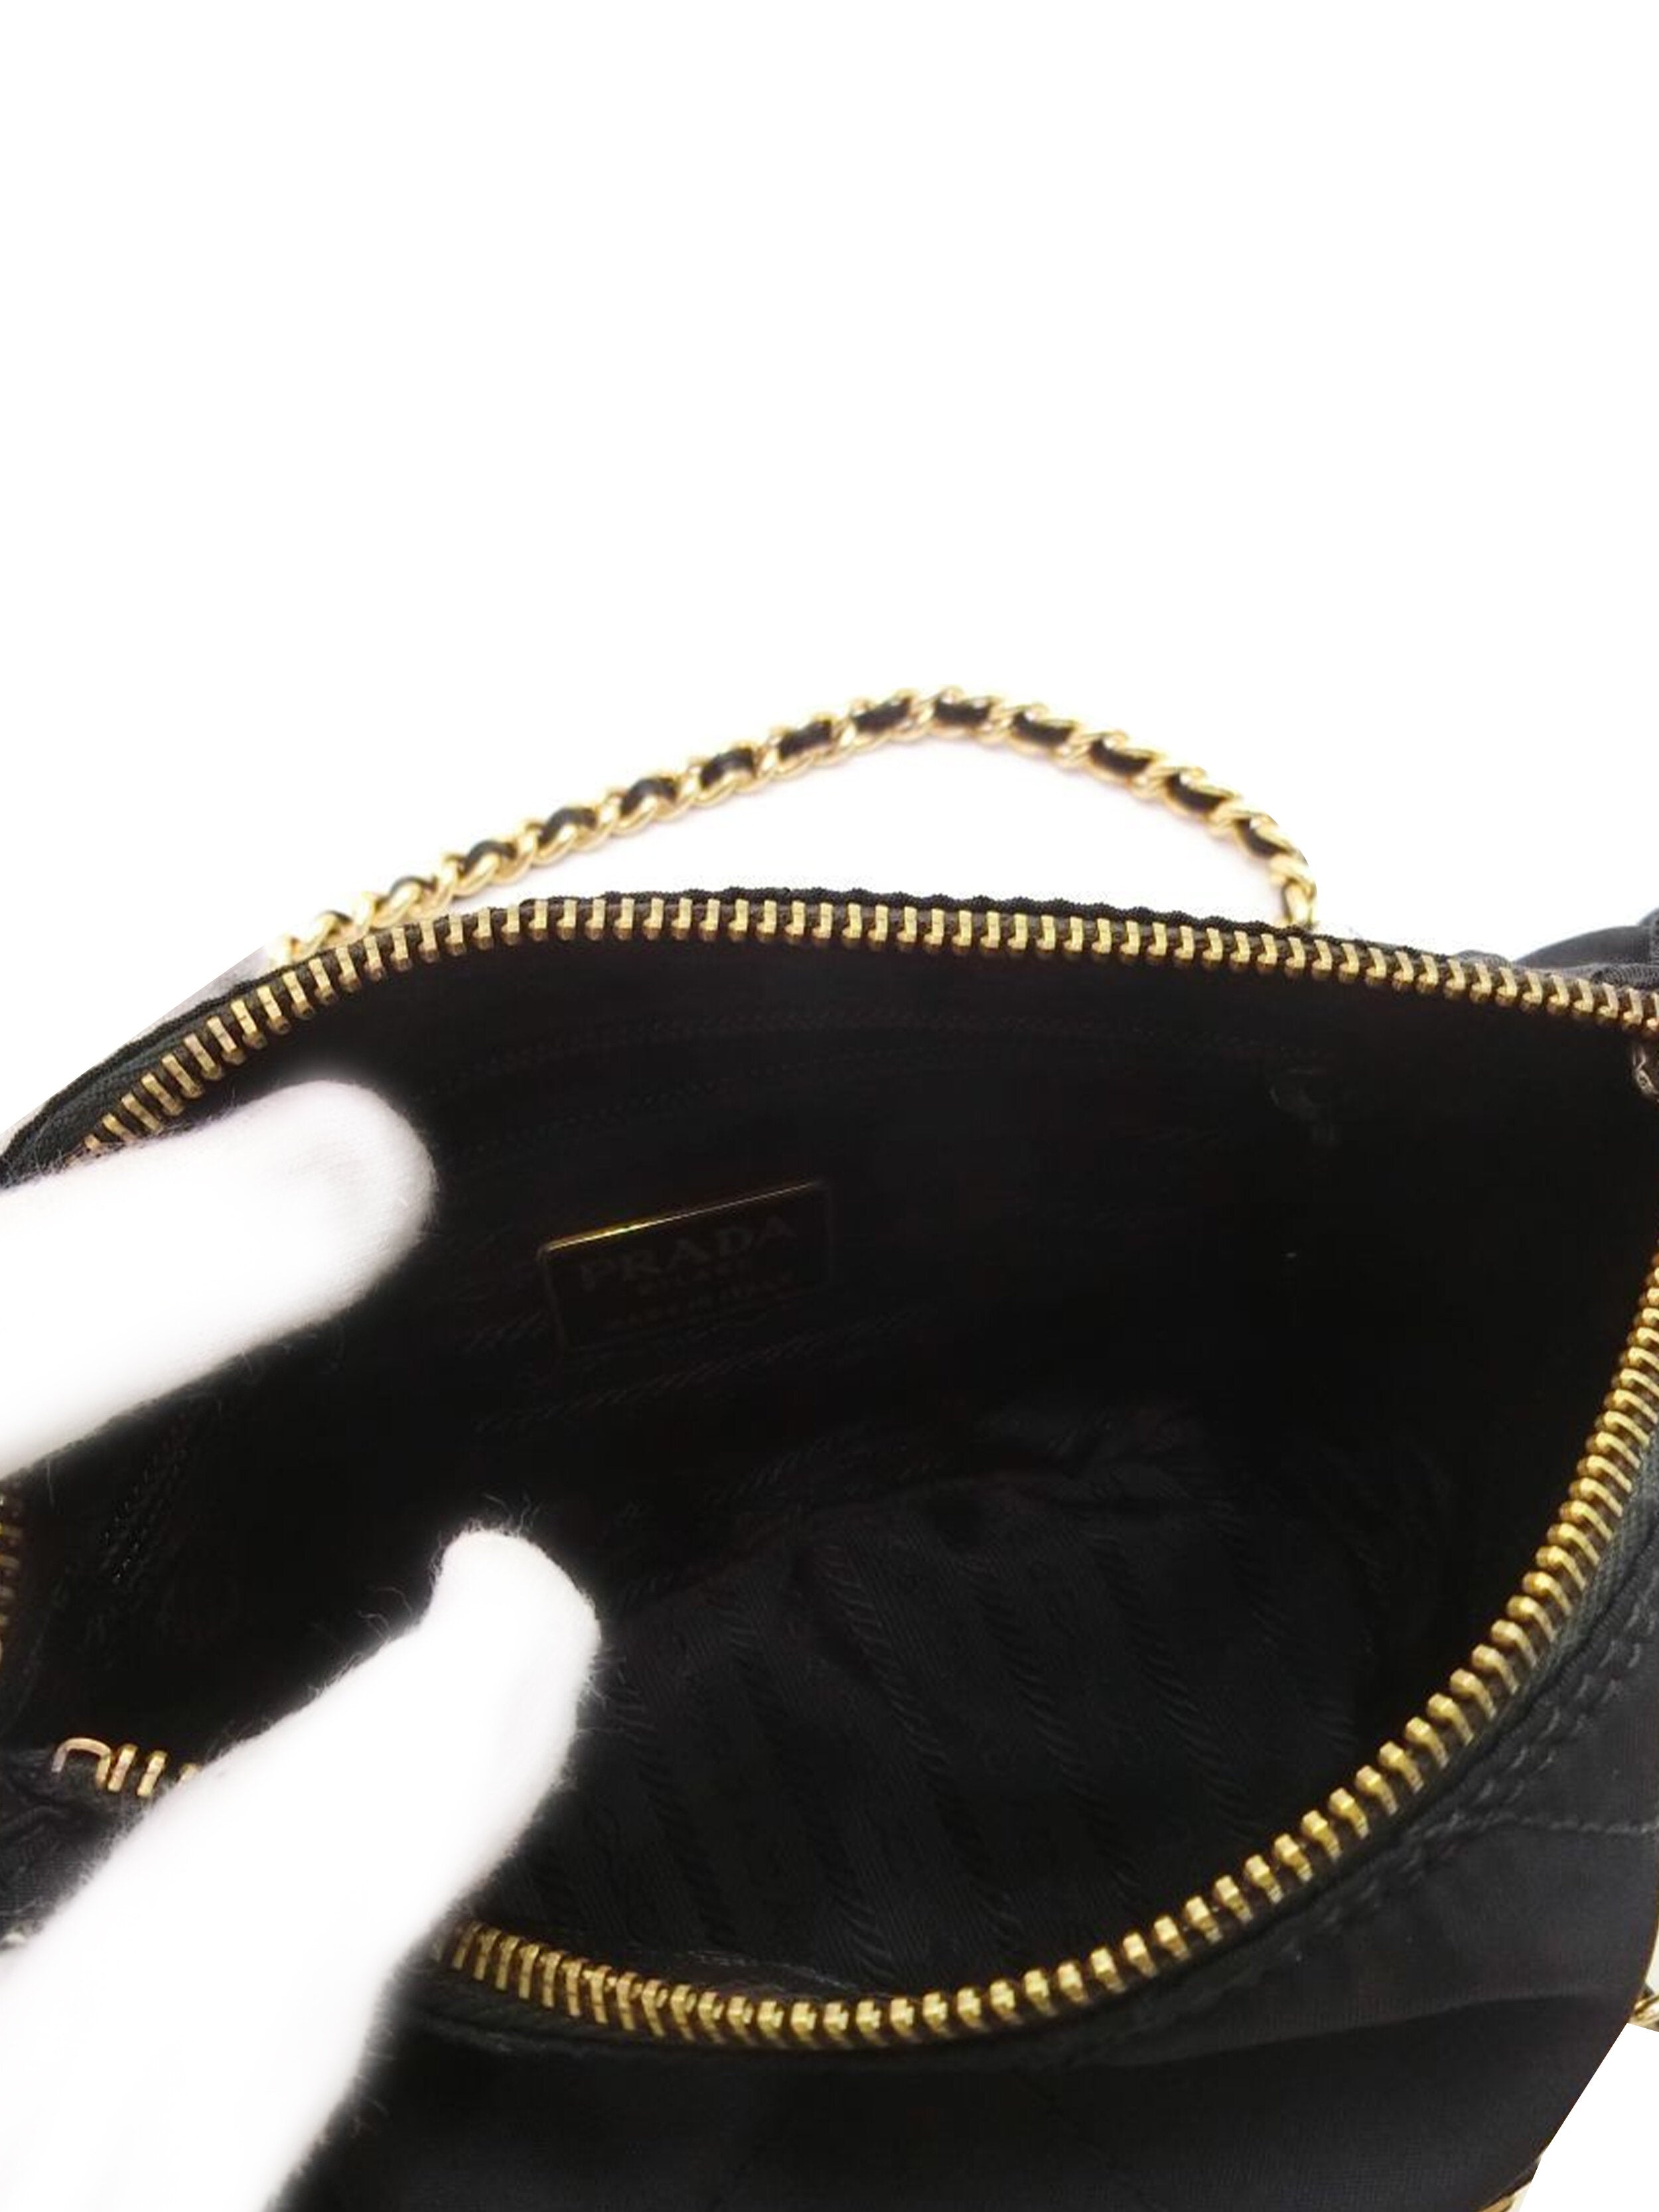 Prada 2000s Black Nylon Leather Shoulder Bag